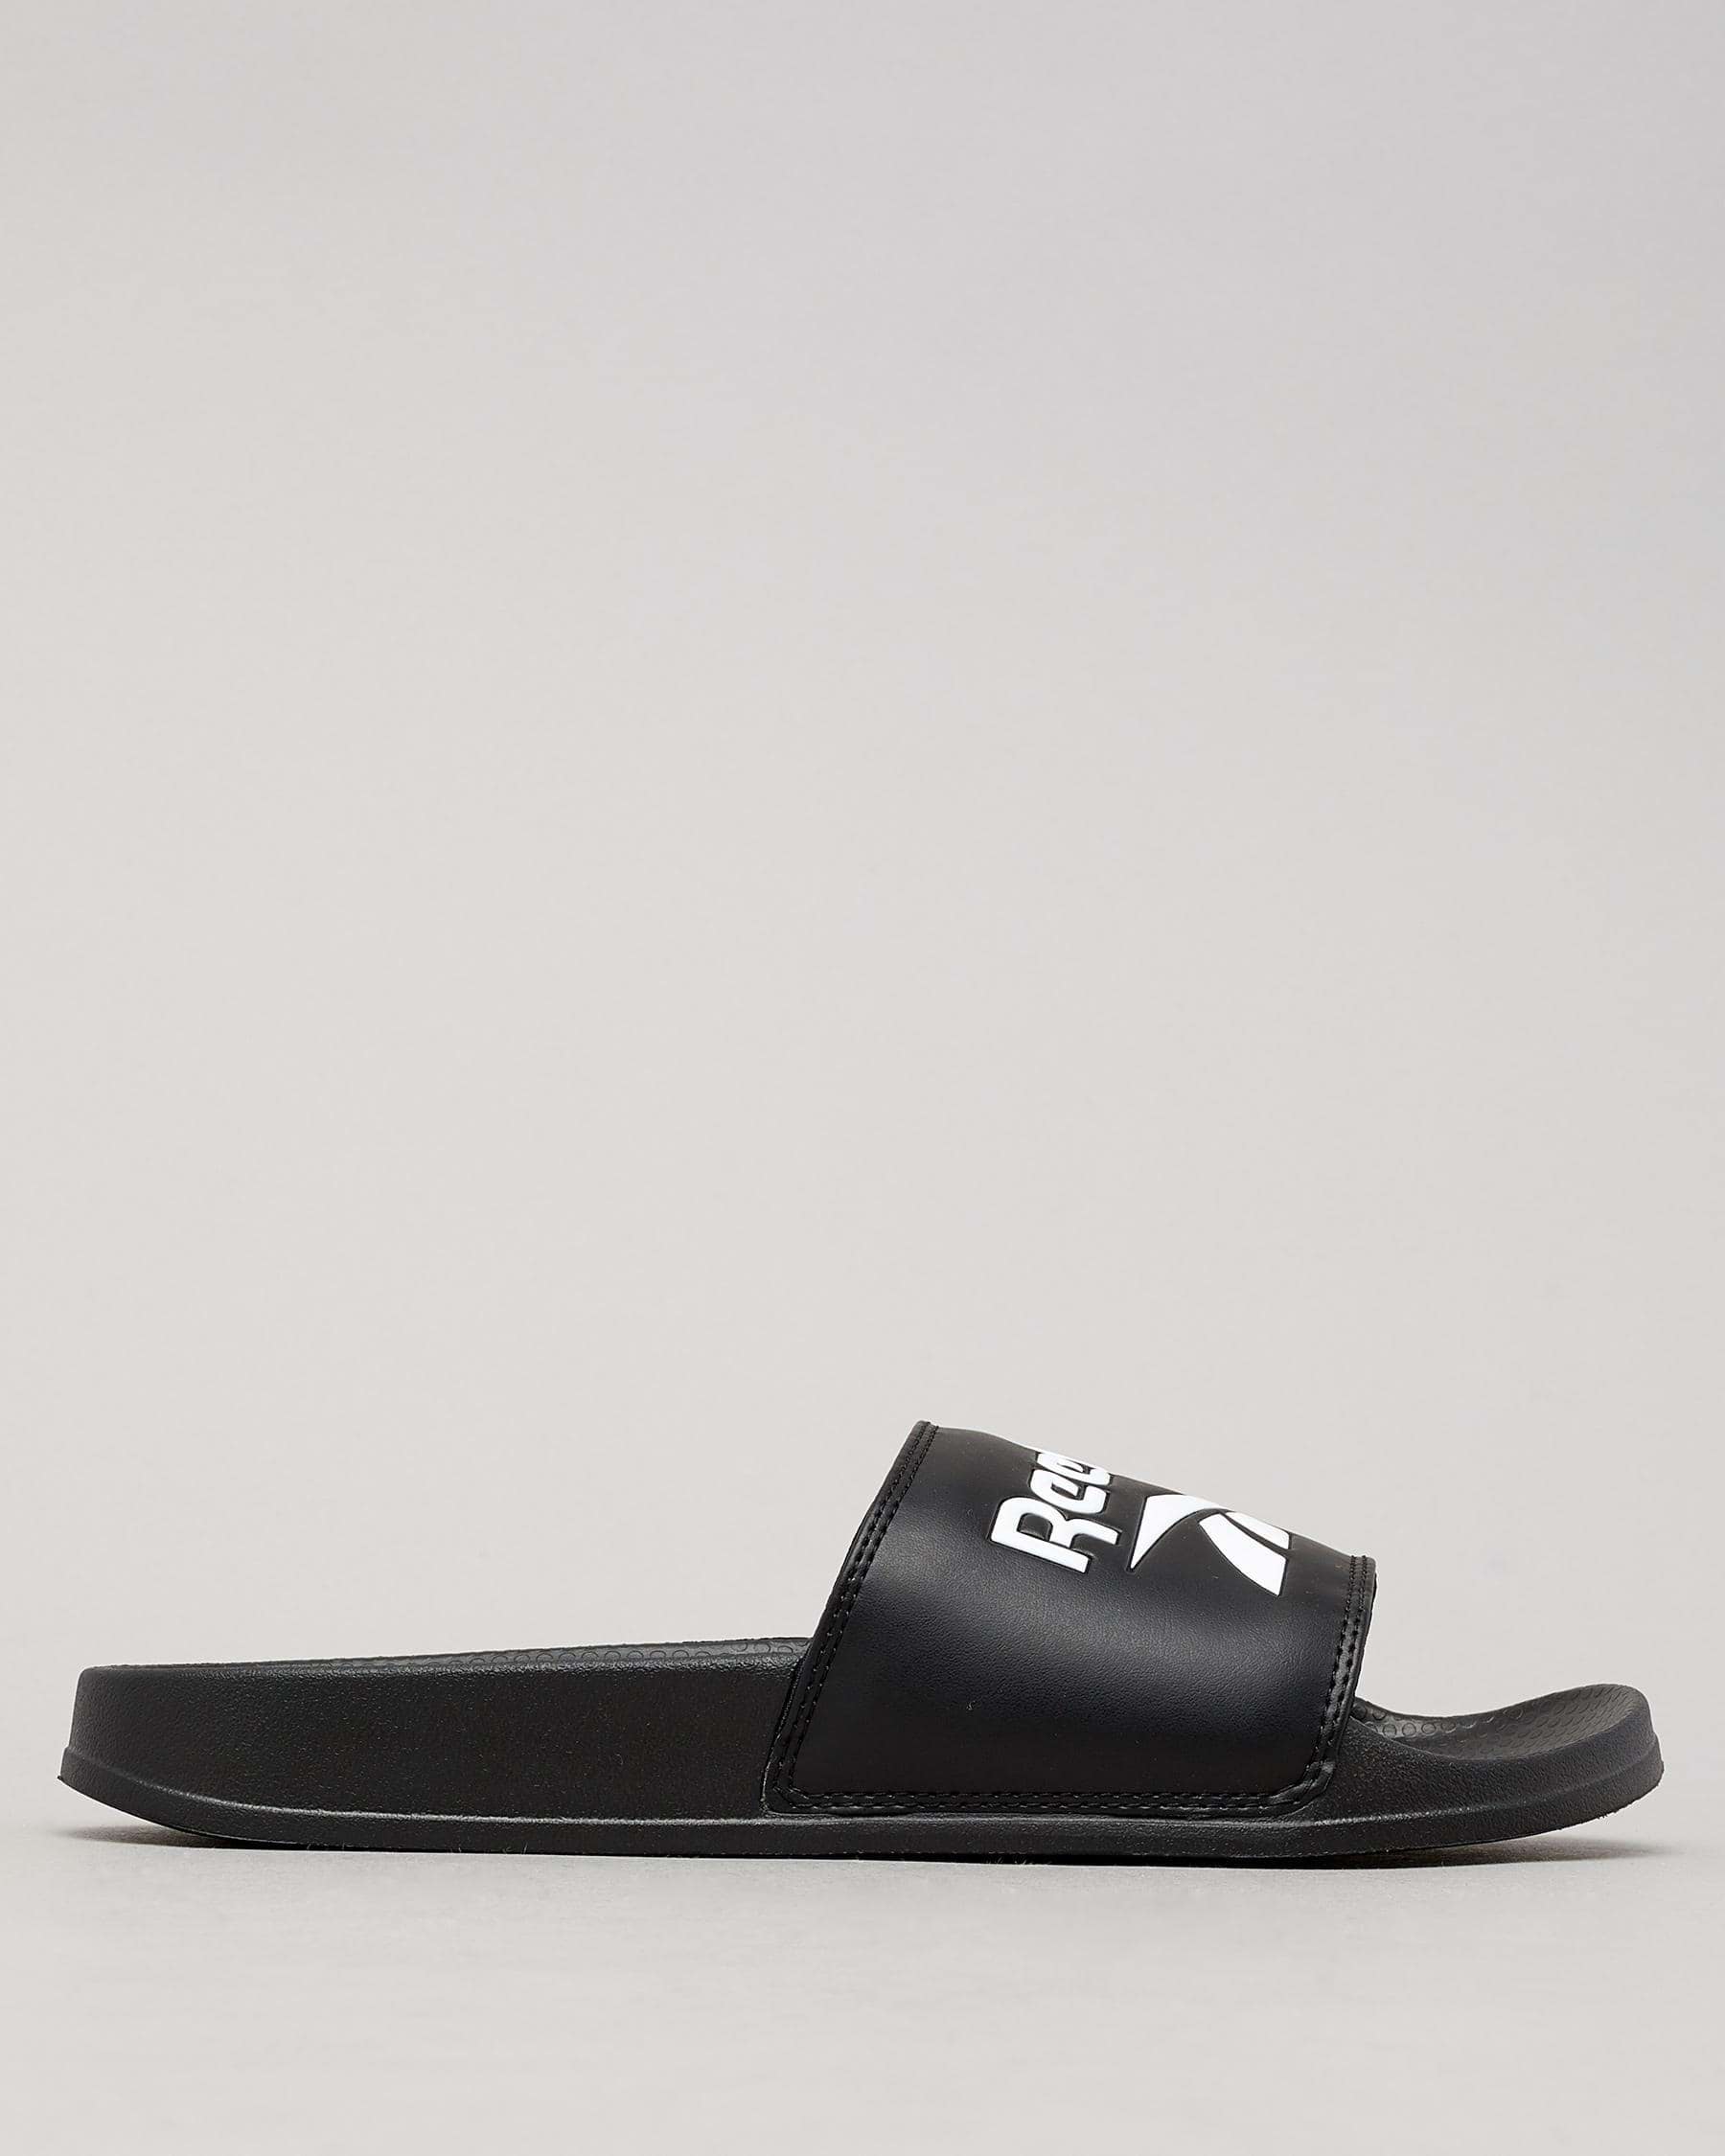 Reebok Classic Slide Sandals In Black/white/black - Fast Shipping ...